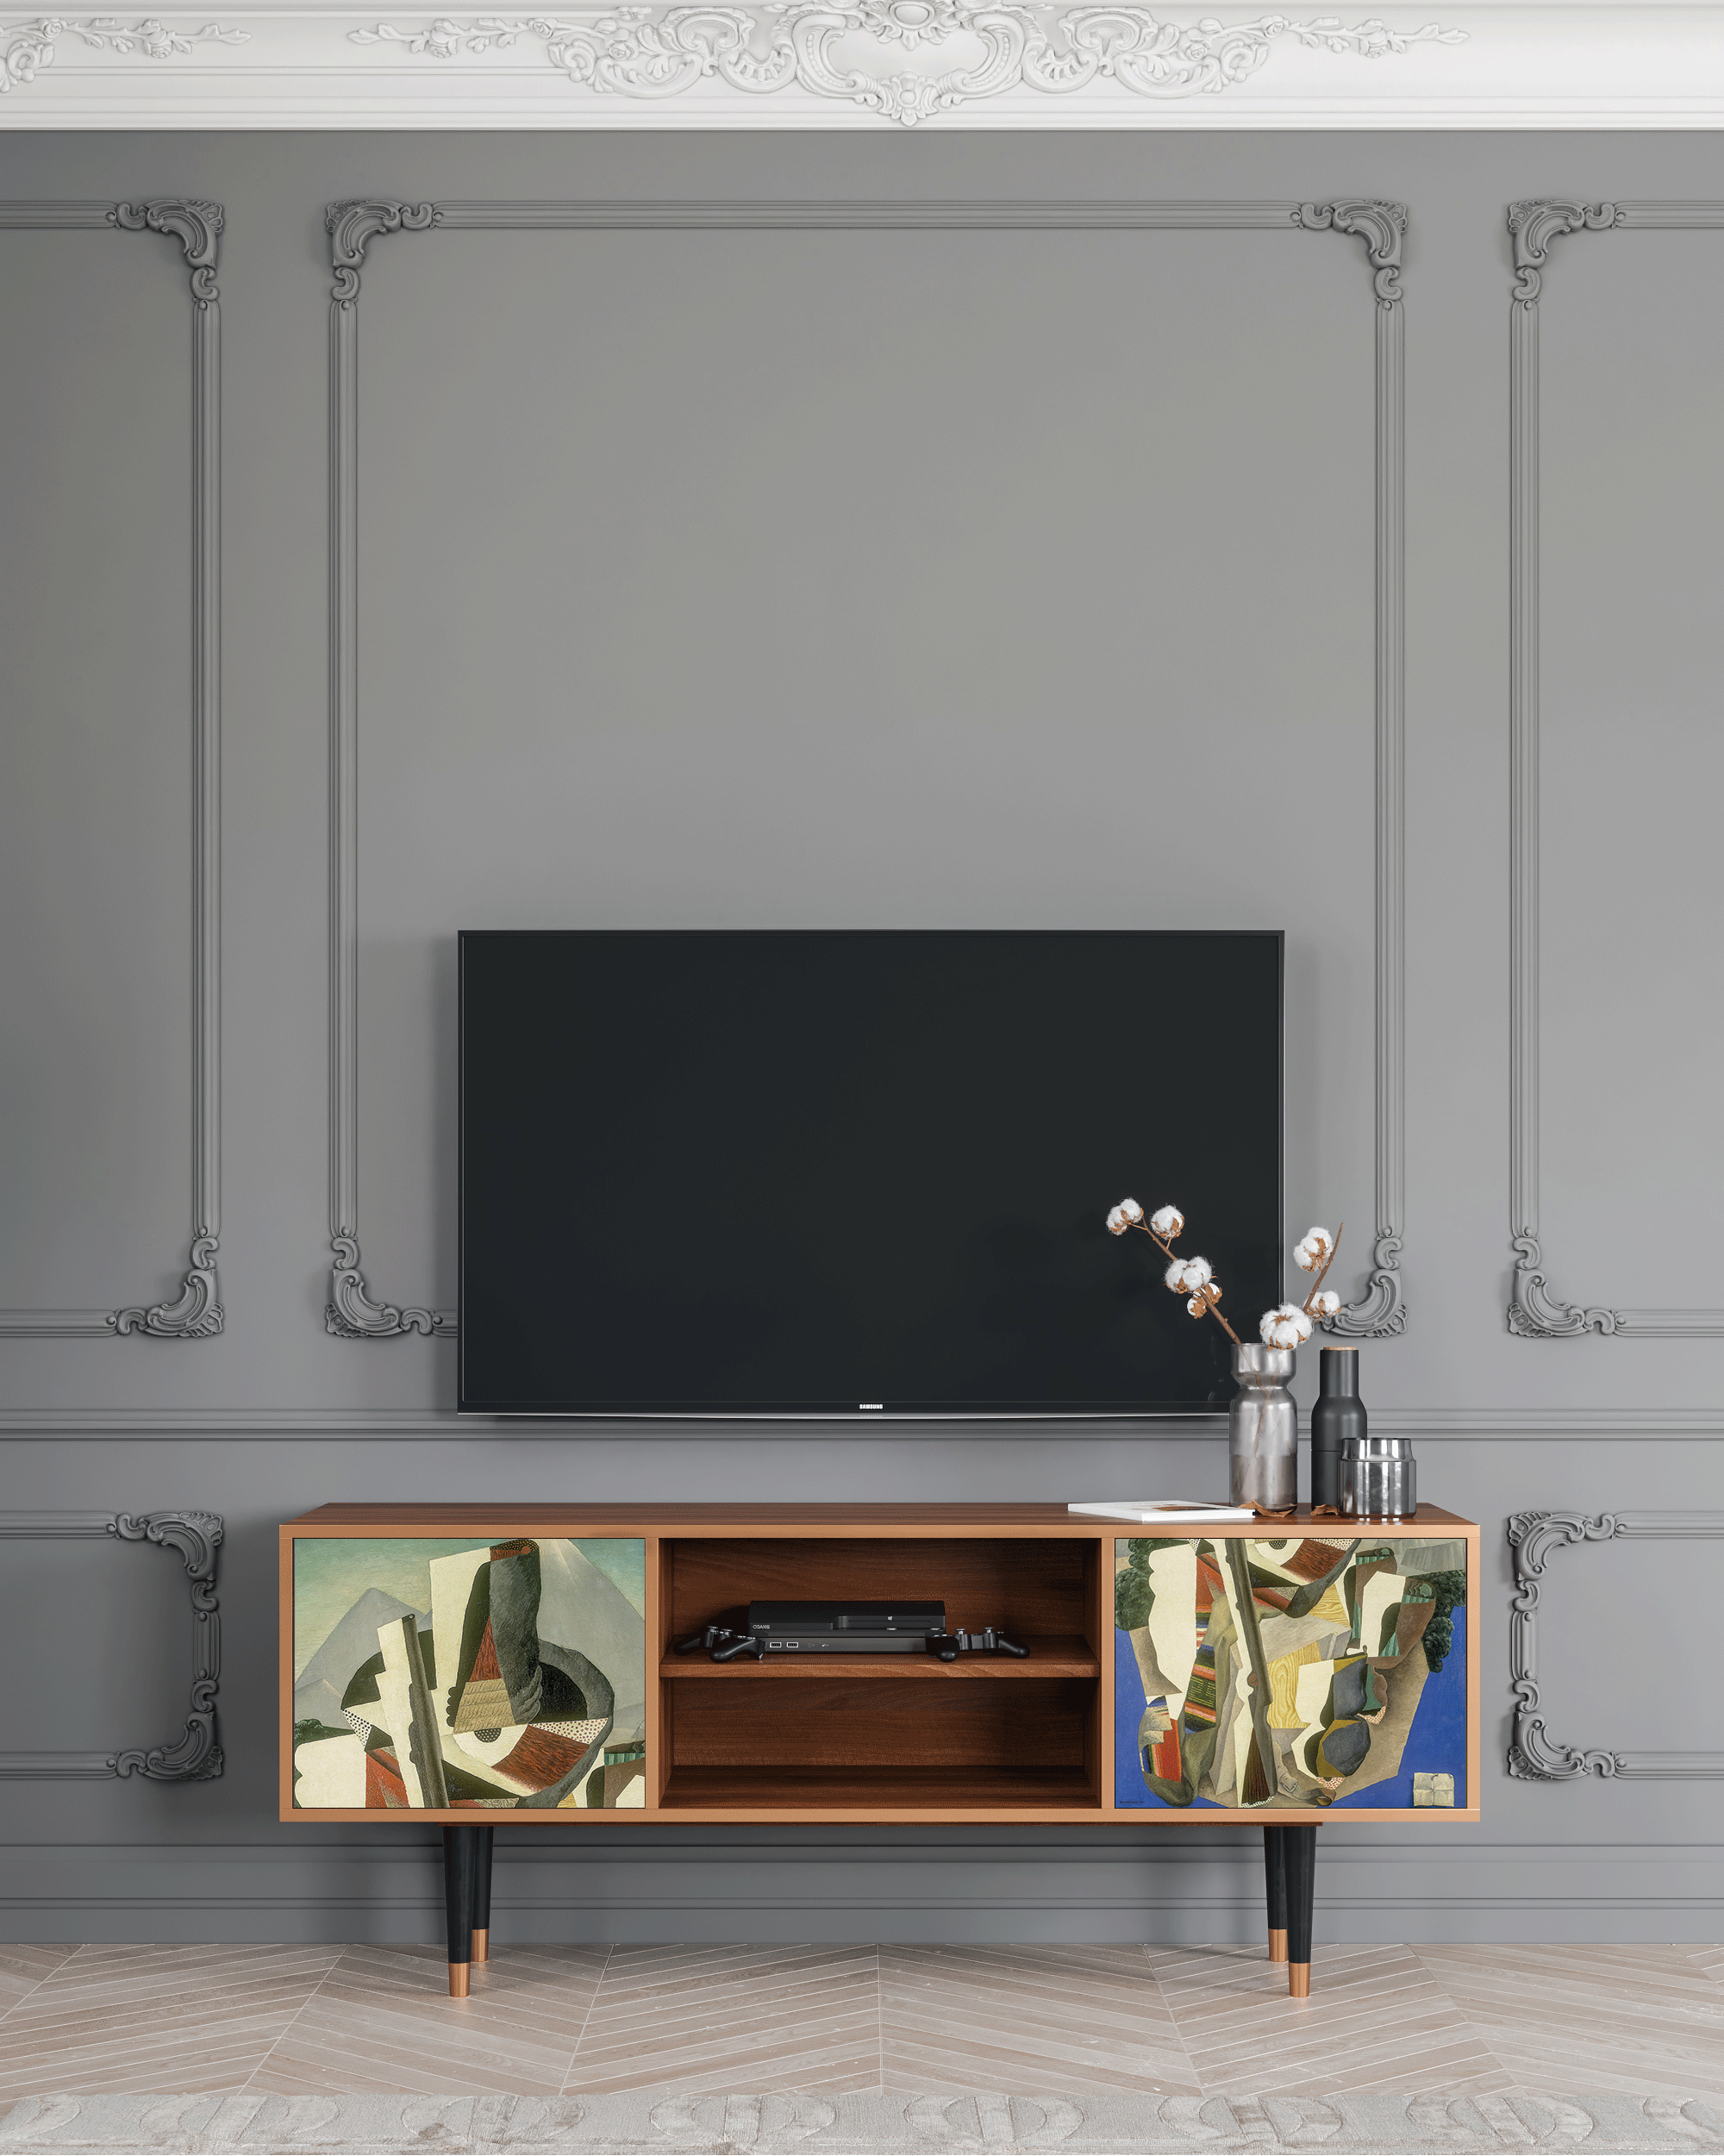 ТВ-Тумба - STORYZ - T2 The Cubist Paintings by Diego Rivera, 170 x 69 x 48 см, Орех - фотография № 1